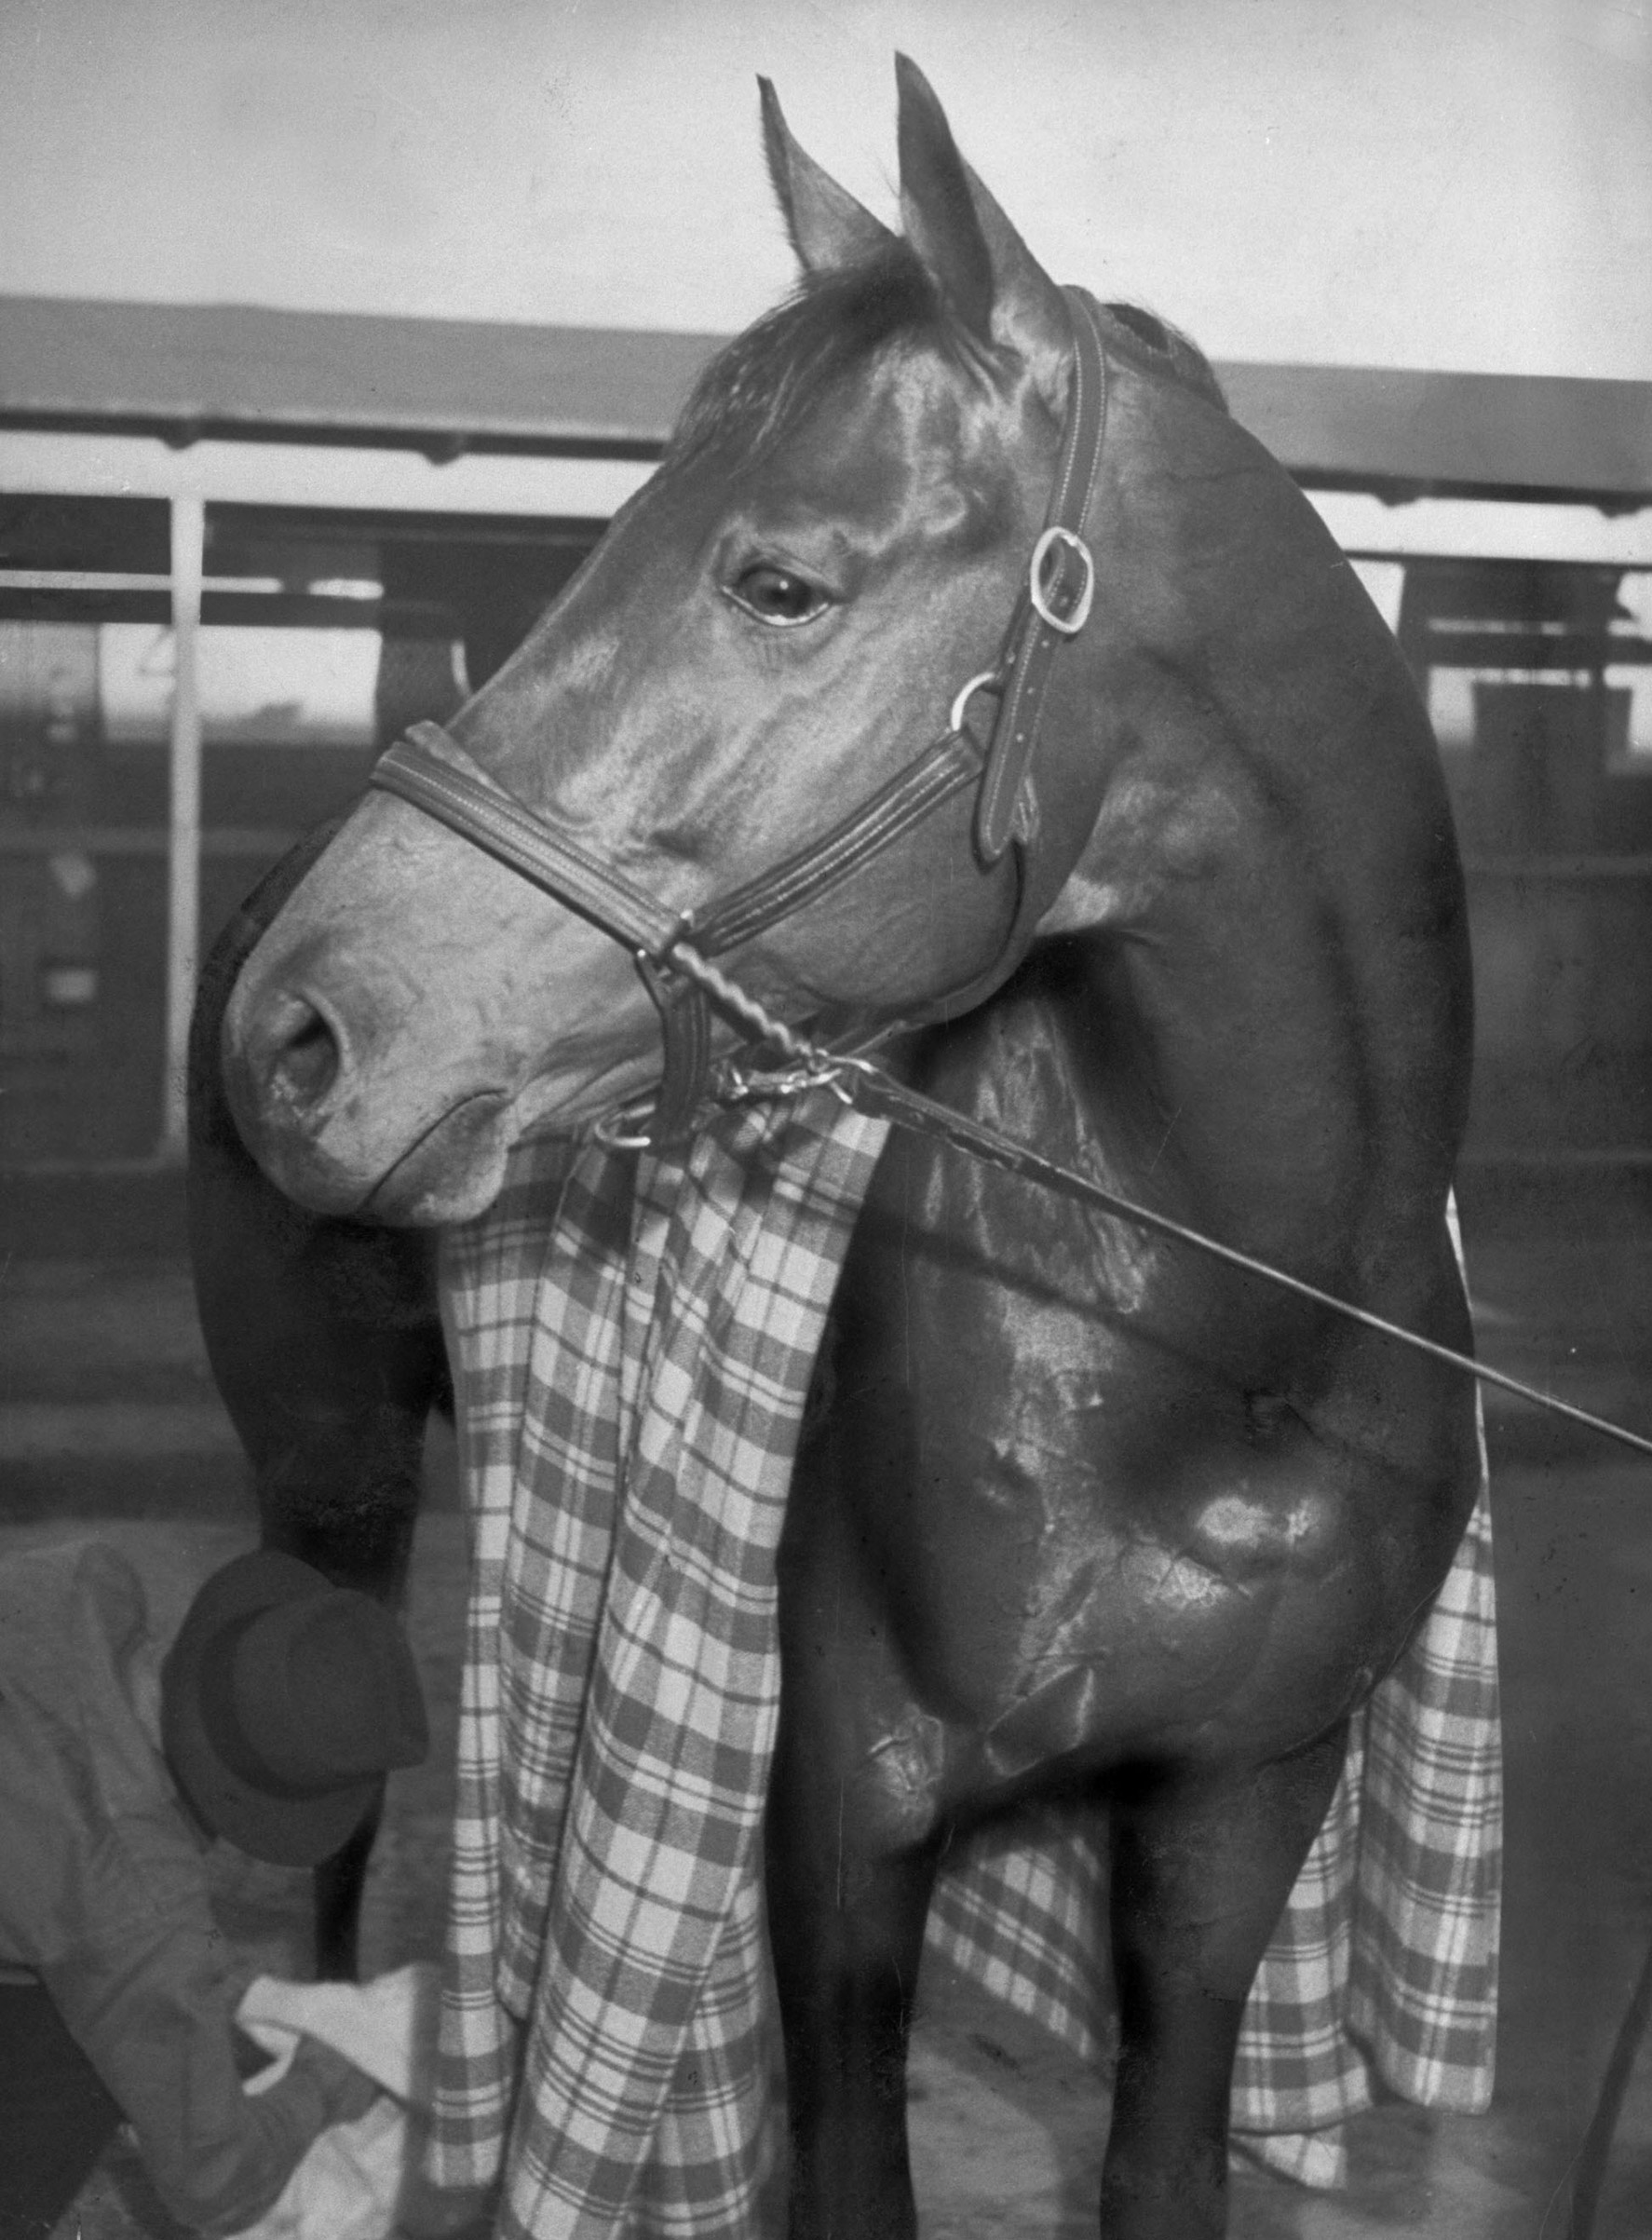 Championship horse Seabiscuit standing in stall after winning Santa Anita Handicap, 1940.